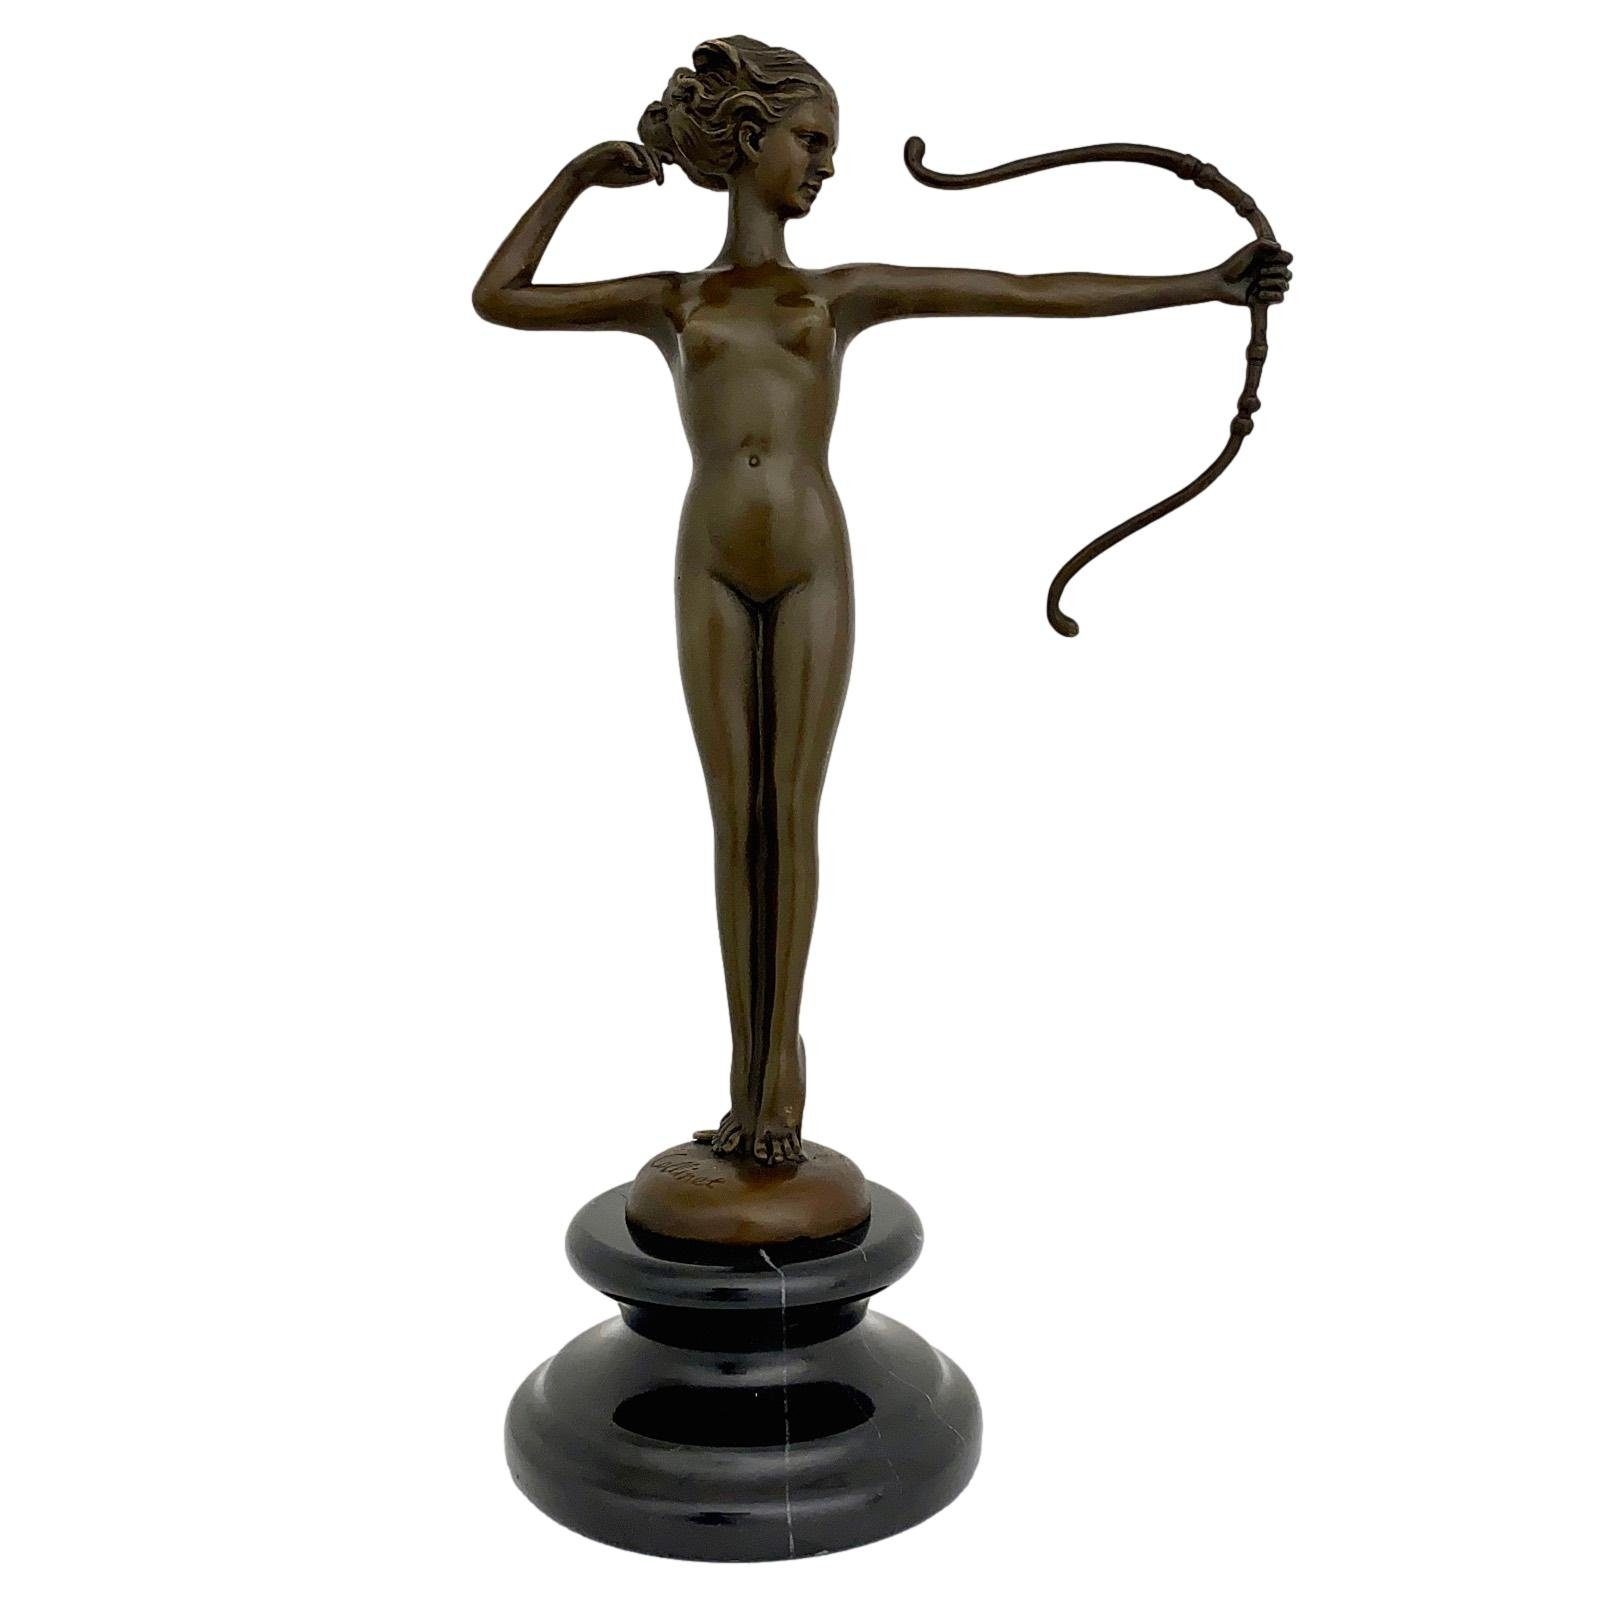 Aubaho Skulptur Bronze Diana Statue Figur Bronzefigur Antik-Stil Bronzeskulptur Bogen